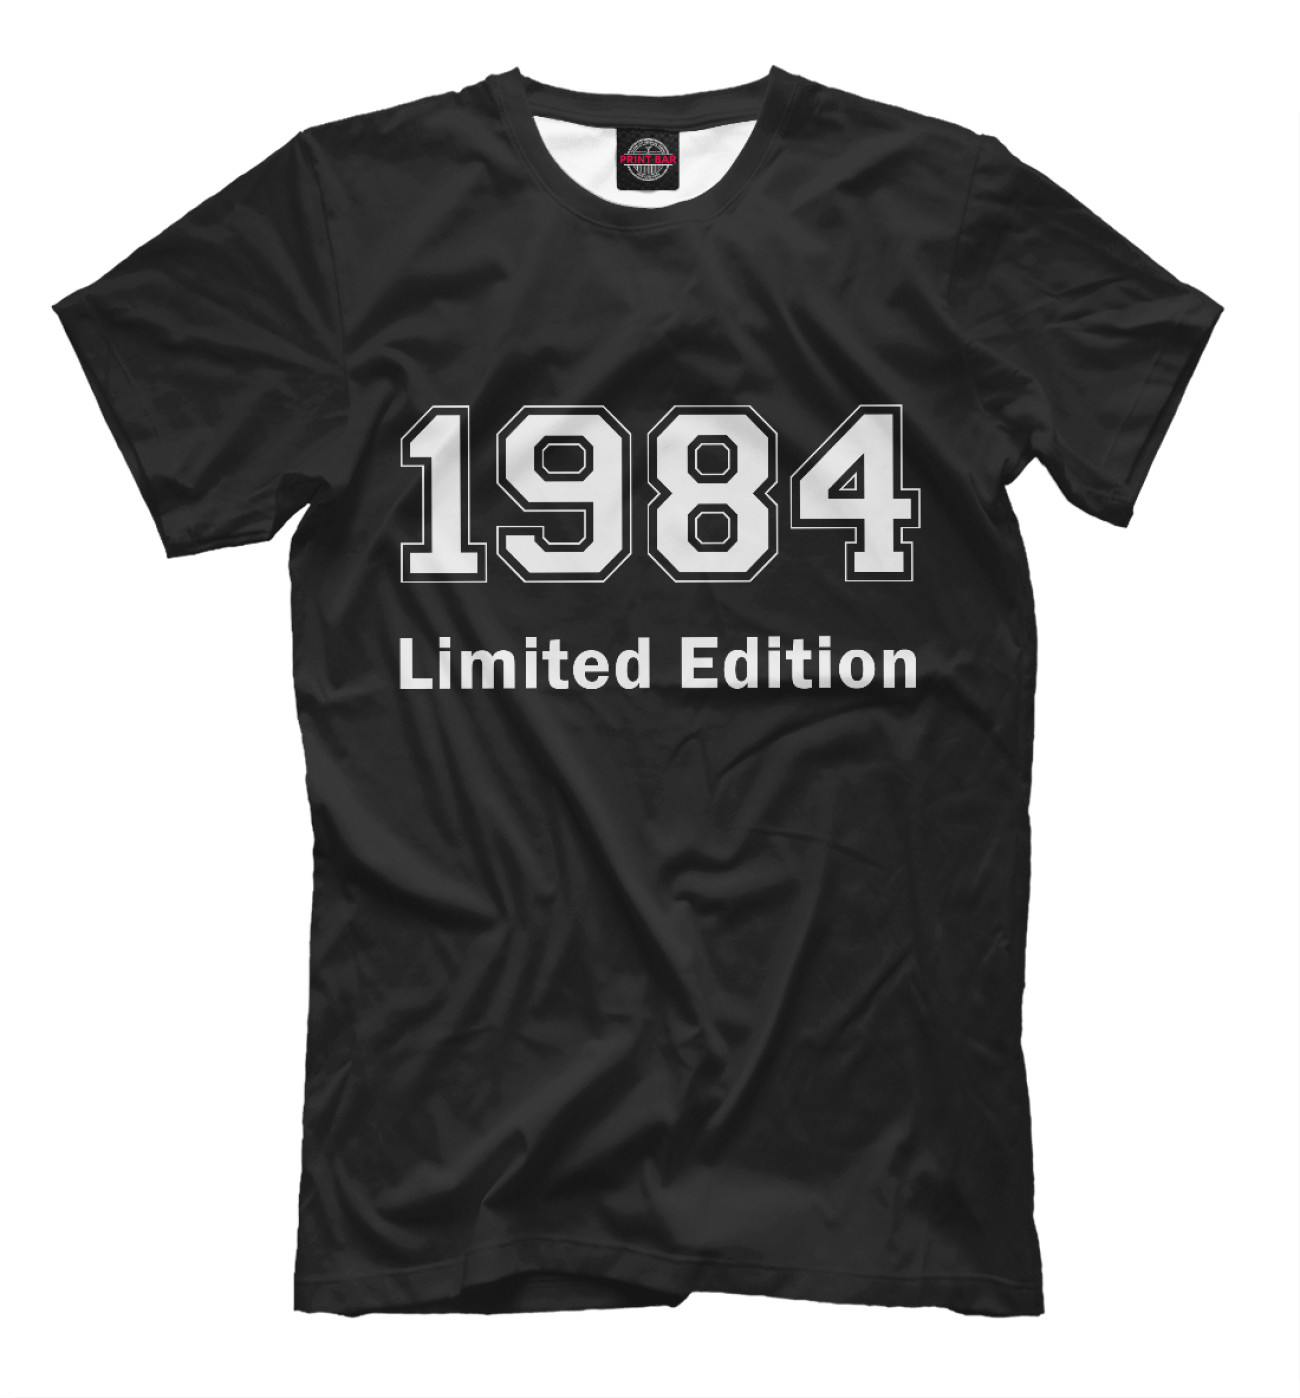 Мужская Футболка 1984 Limited Edition, артикул: DVC-465851-fut-2